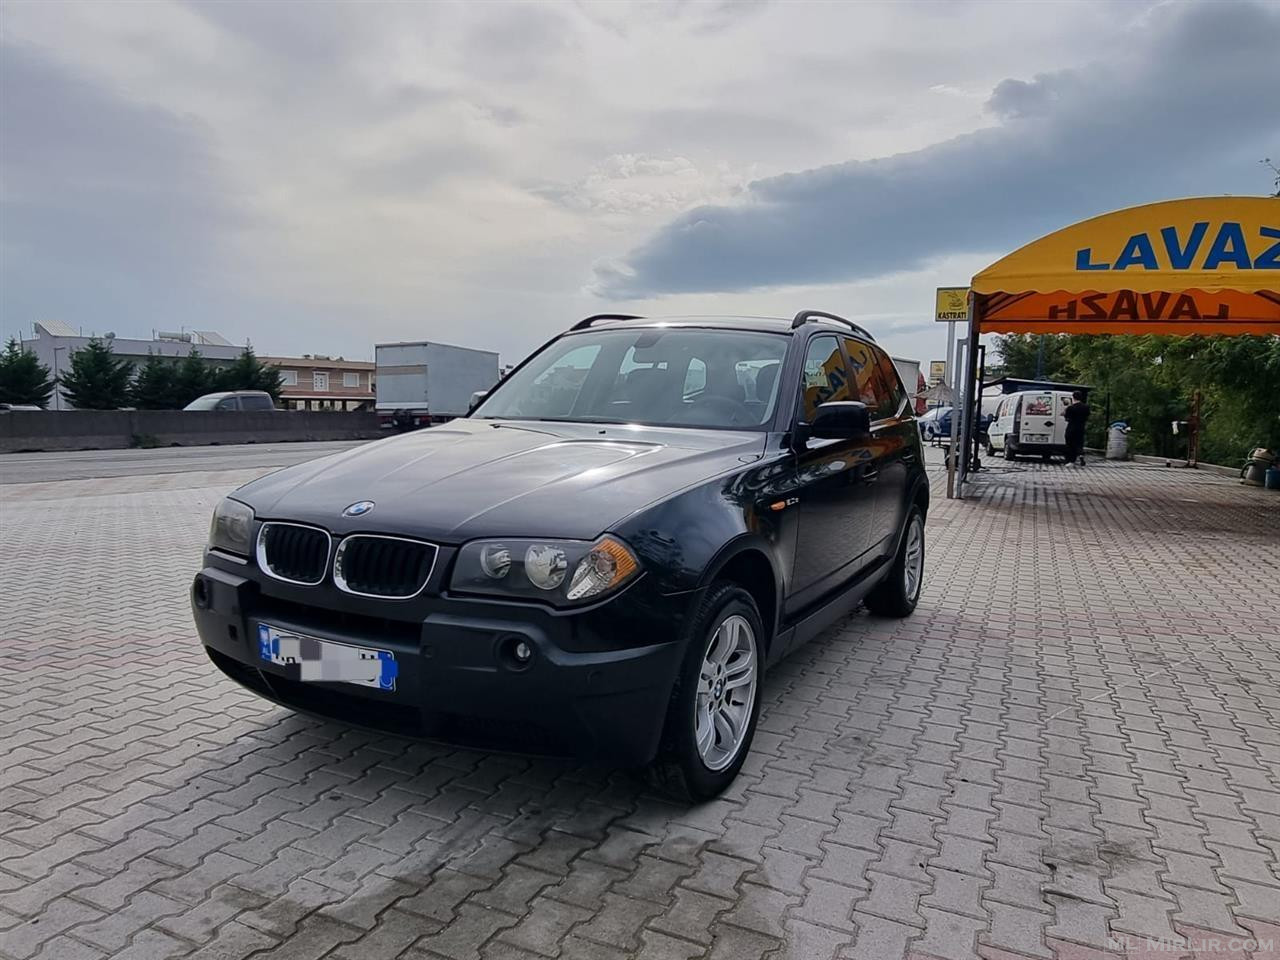 BMW X3 2006 naft 2.0 Manual okazion 3700 euro okazion 